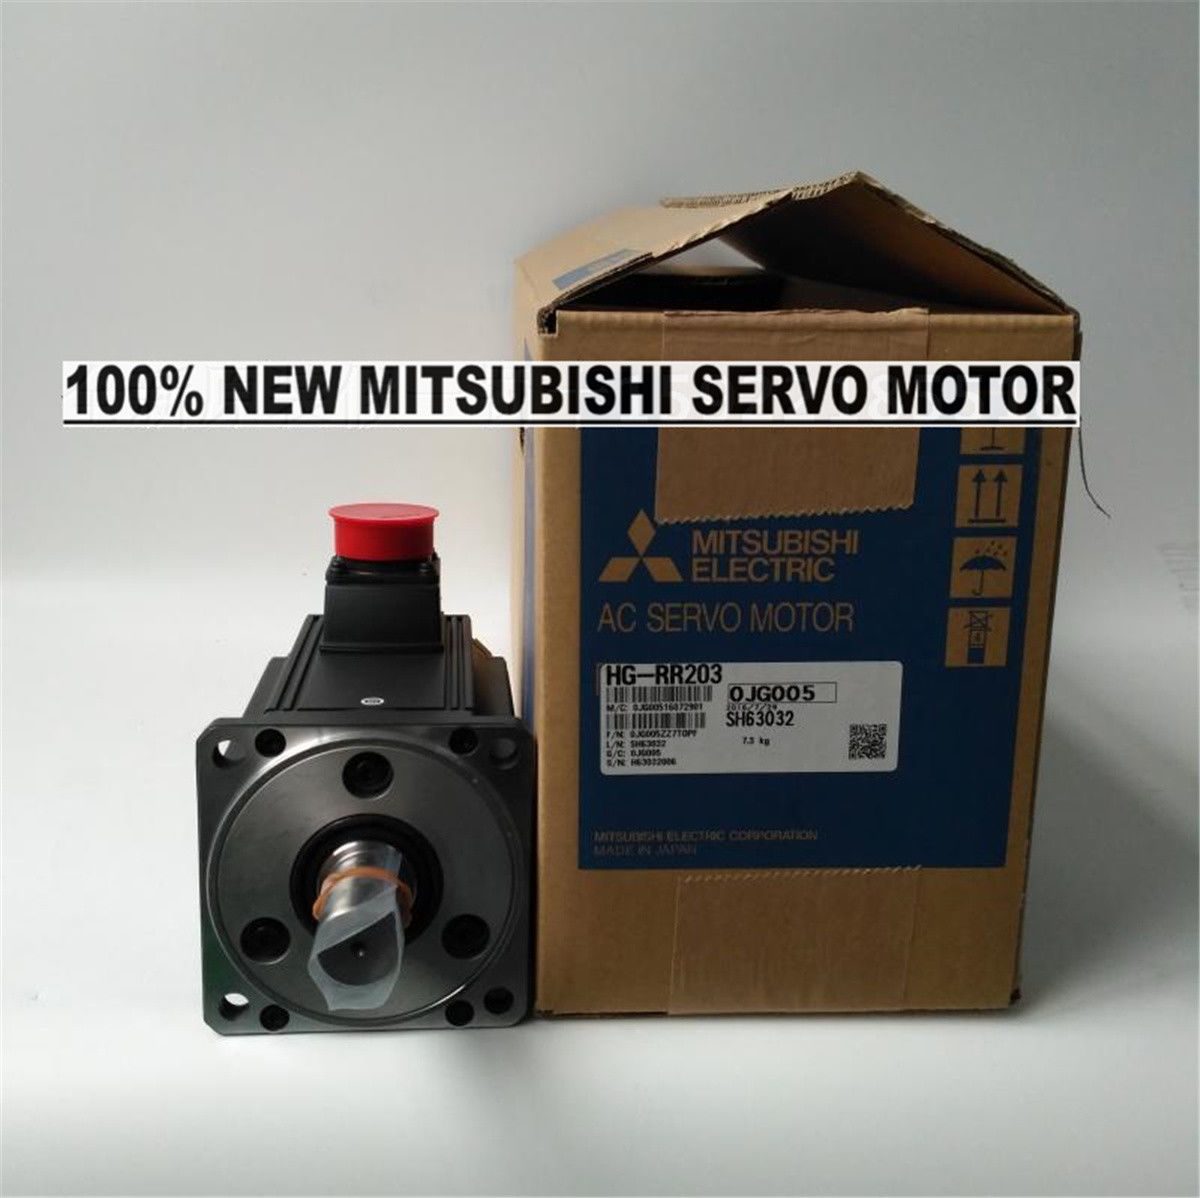 NEW Mitsubishi Servo Motor HG-RR203 in box HGRR203